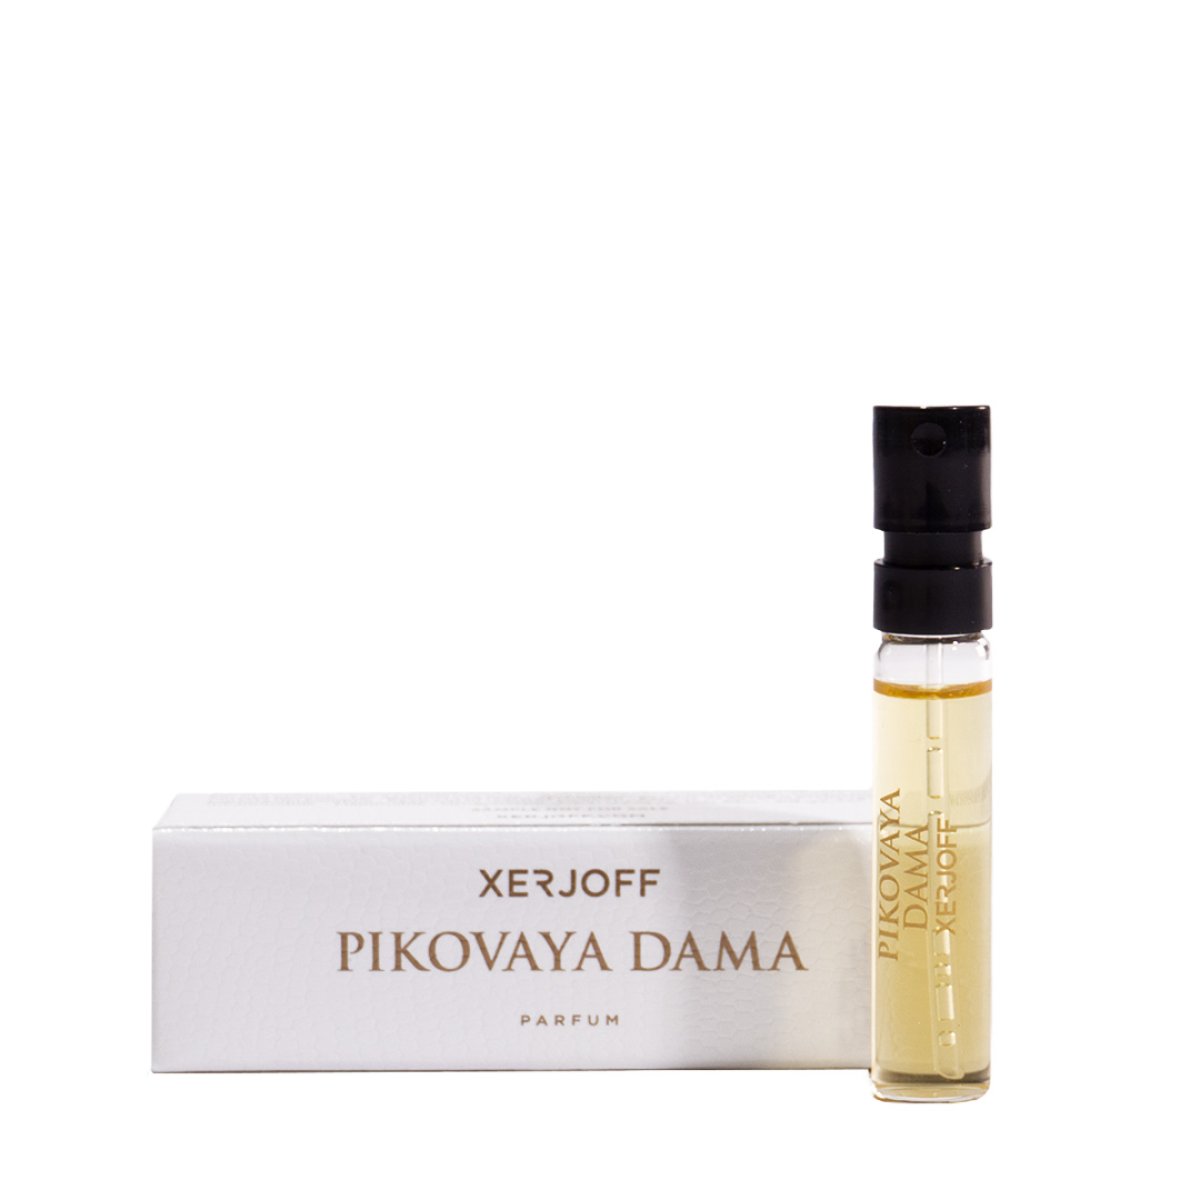 Xerjoff Pikovaya Dama Parfum Sample (2 ml) von Xerjoff